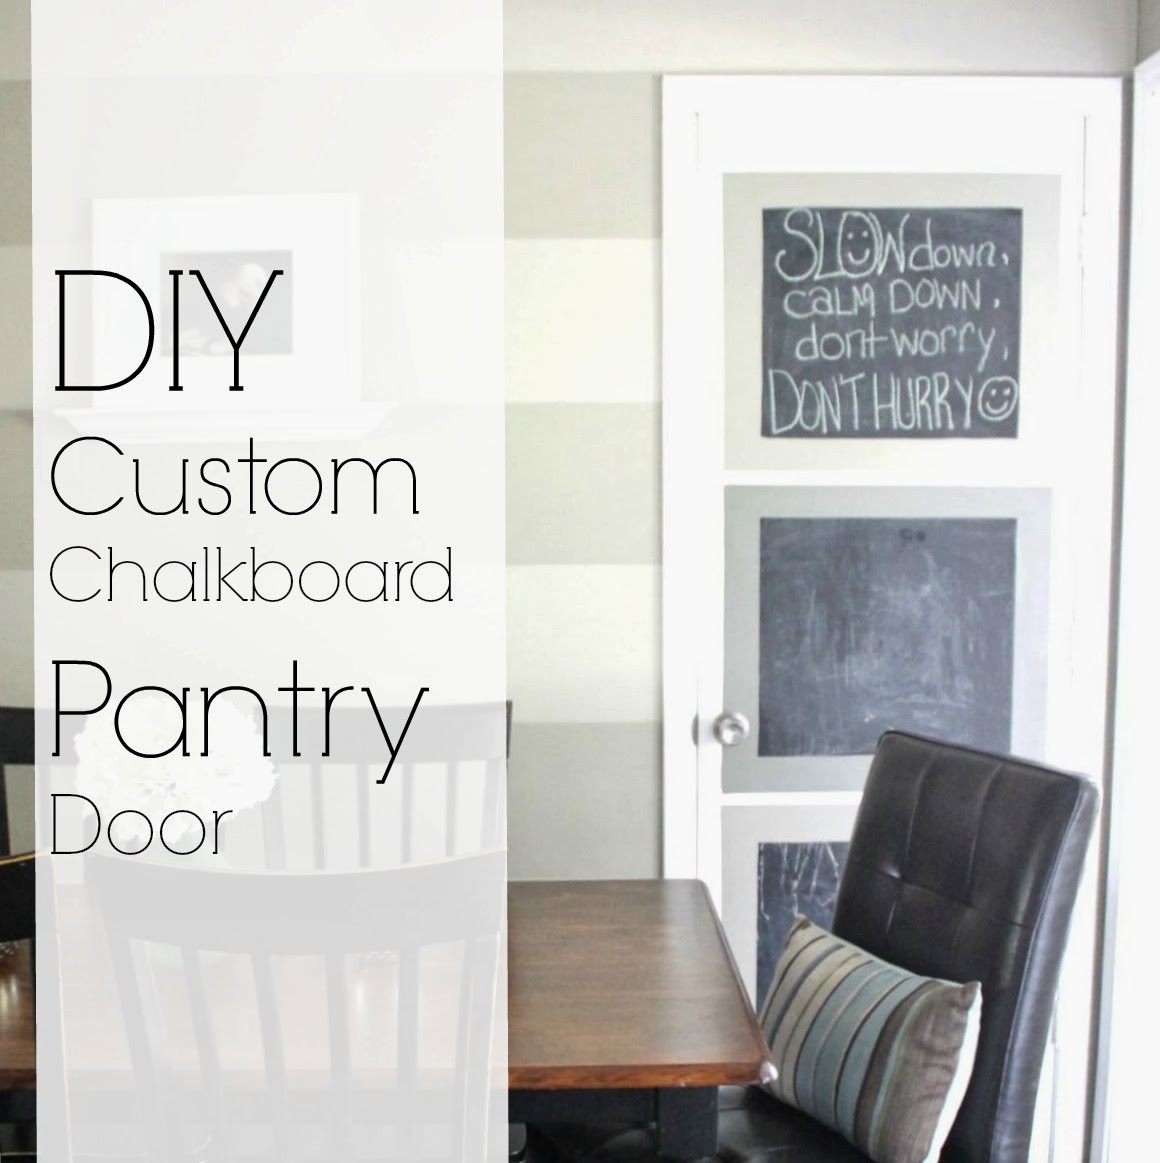 Grace Lee Cottage Customized Chalkboard Pantry Door